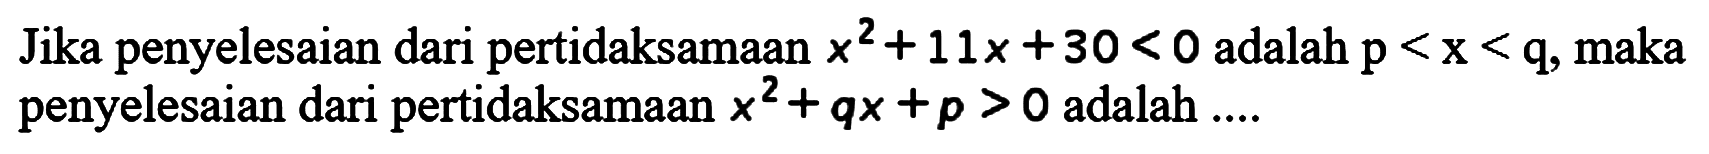 Jika penyelesaian dari pertidaksamaan x^2+ 11x +30 < 0 adalah p < x < q maka Jika penyelesaian dari pertidaksamaan x^2+qx +p > 0 adalah